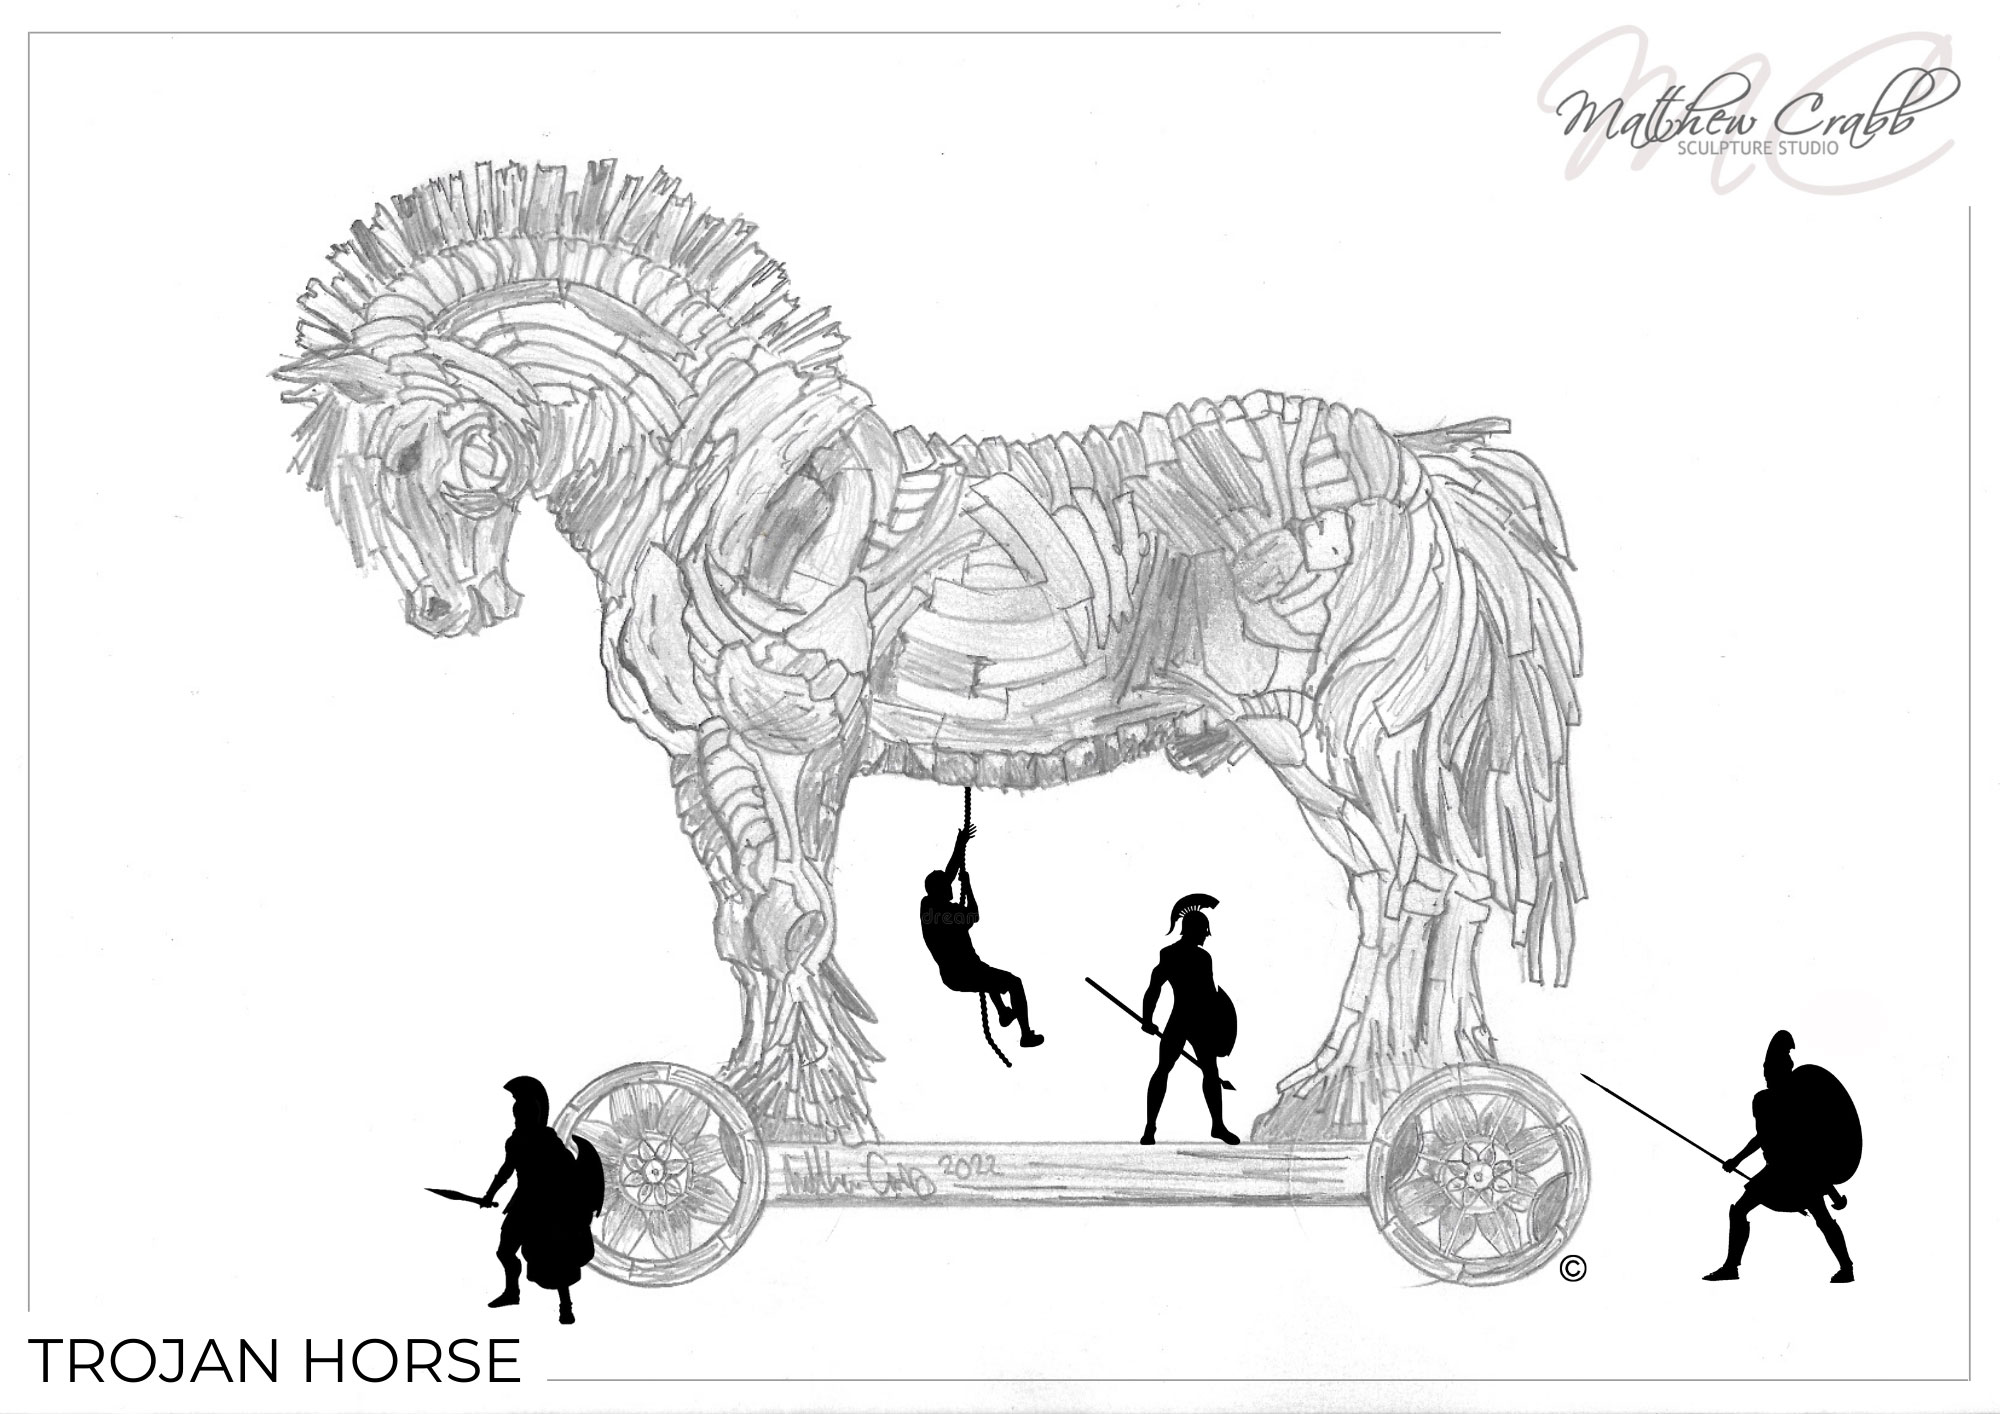 Trojan Horse Concept Design by Matthew Crabb